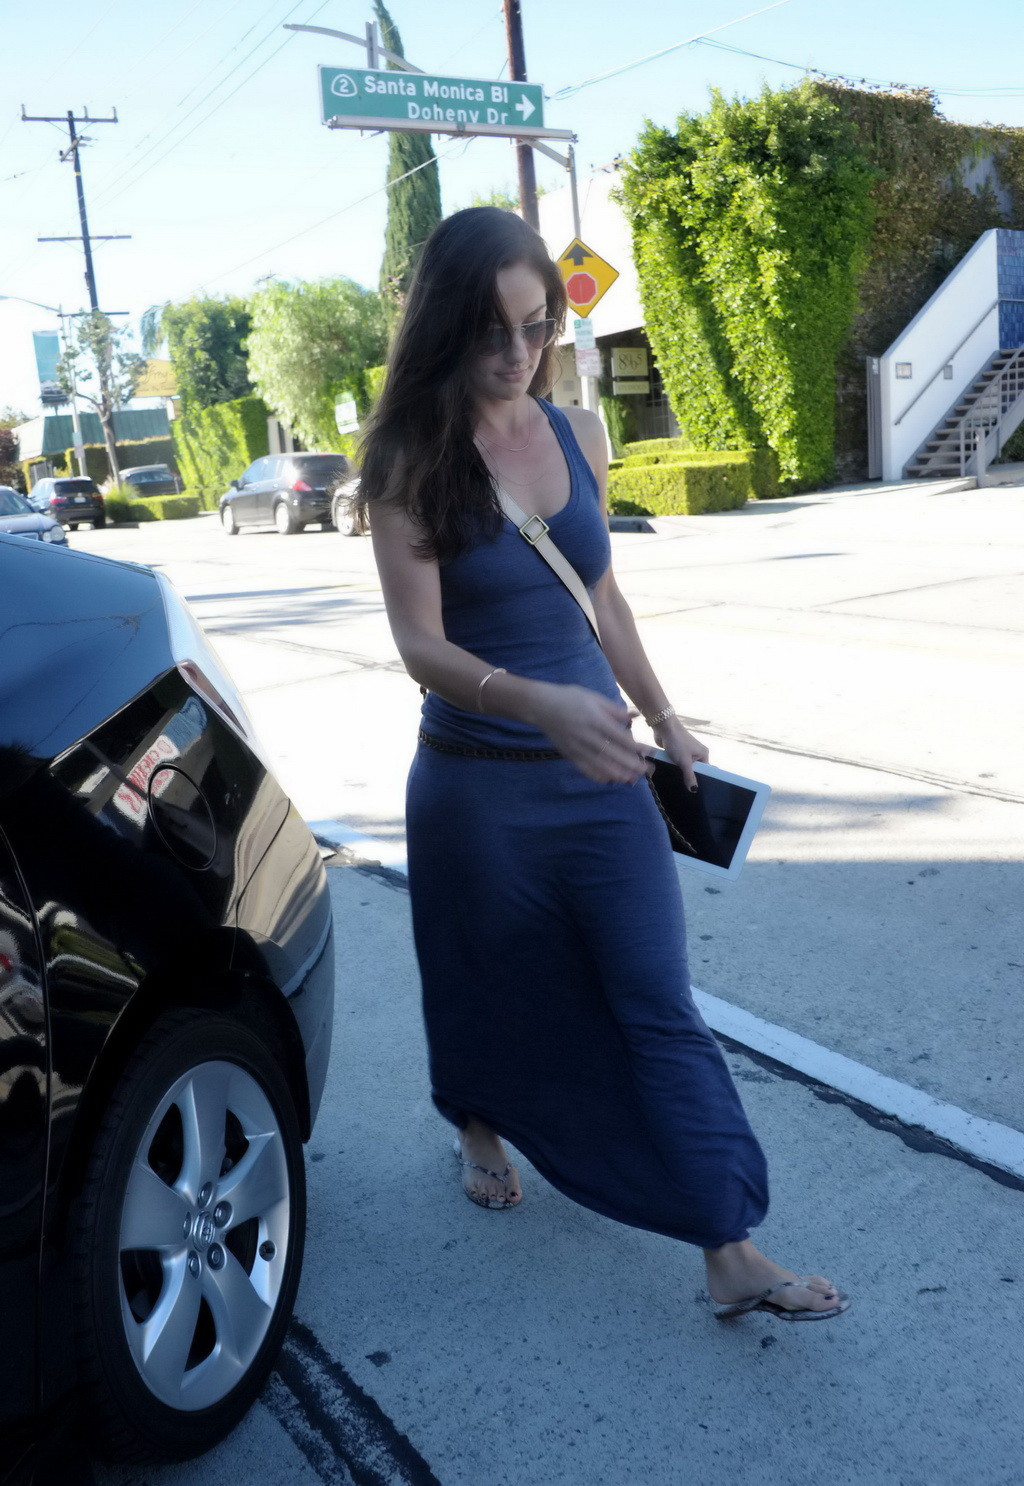 Minka Kelly braless shows hard pokies in tight gray dress while leaving a salon  #75249848